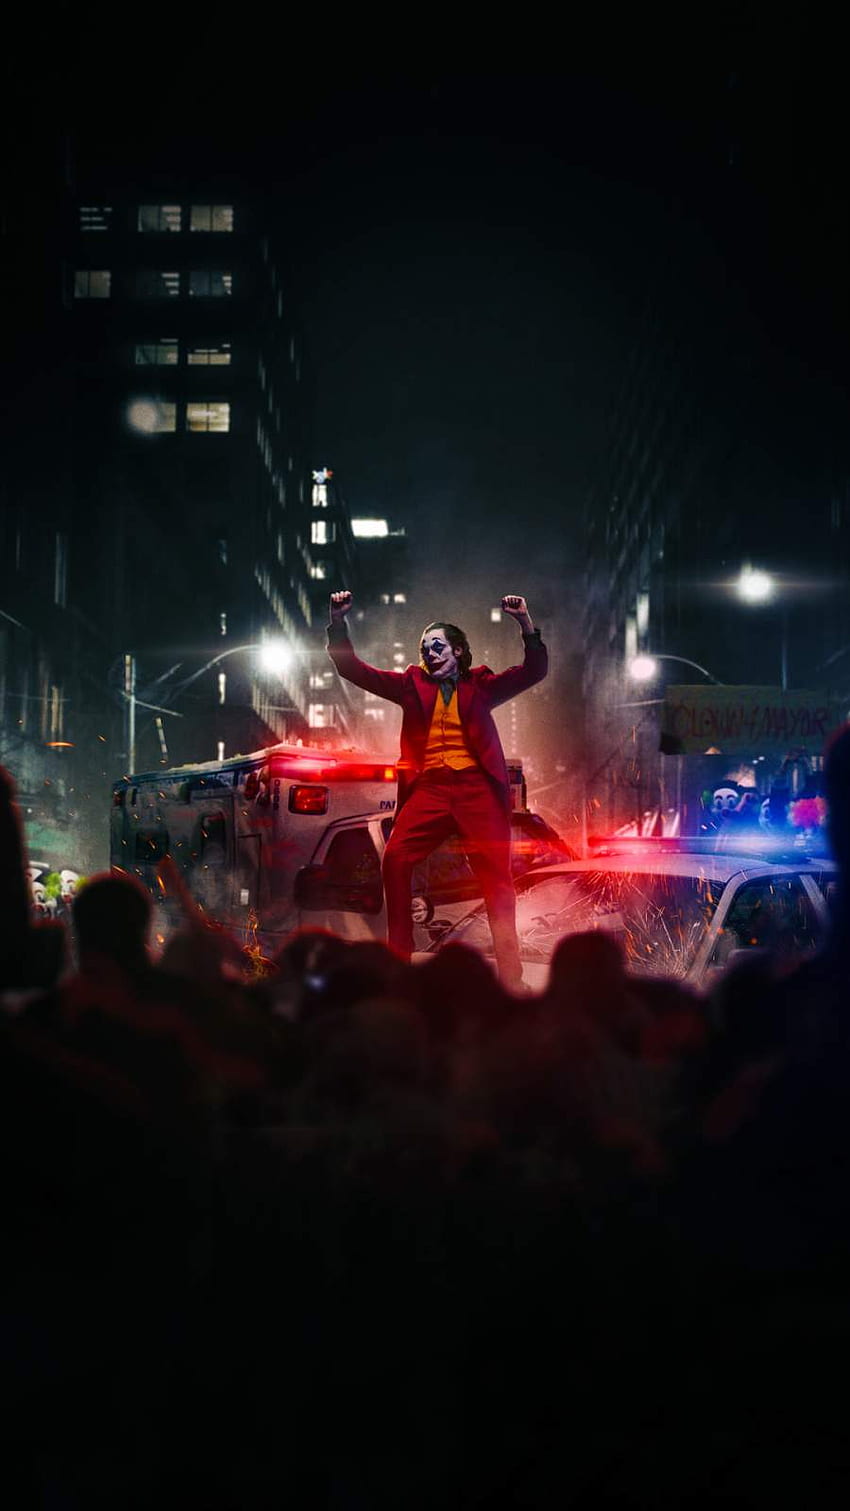 Joker bailando en un coche de policía iPhone - iPhone : iPhone fondo de pantalla del teléfono